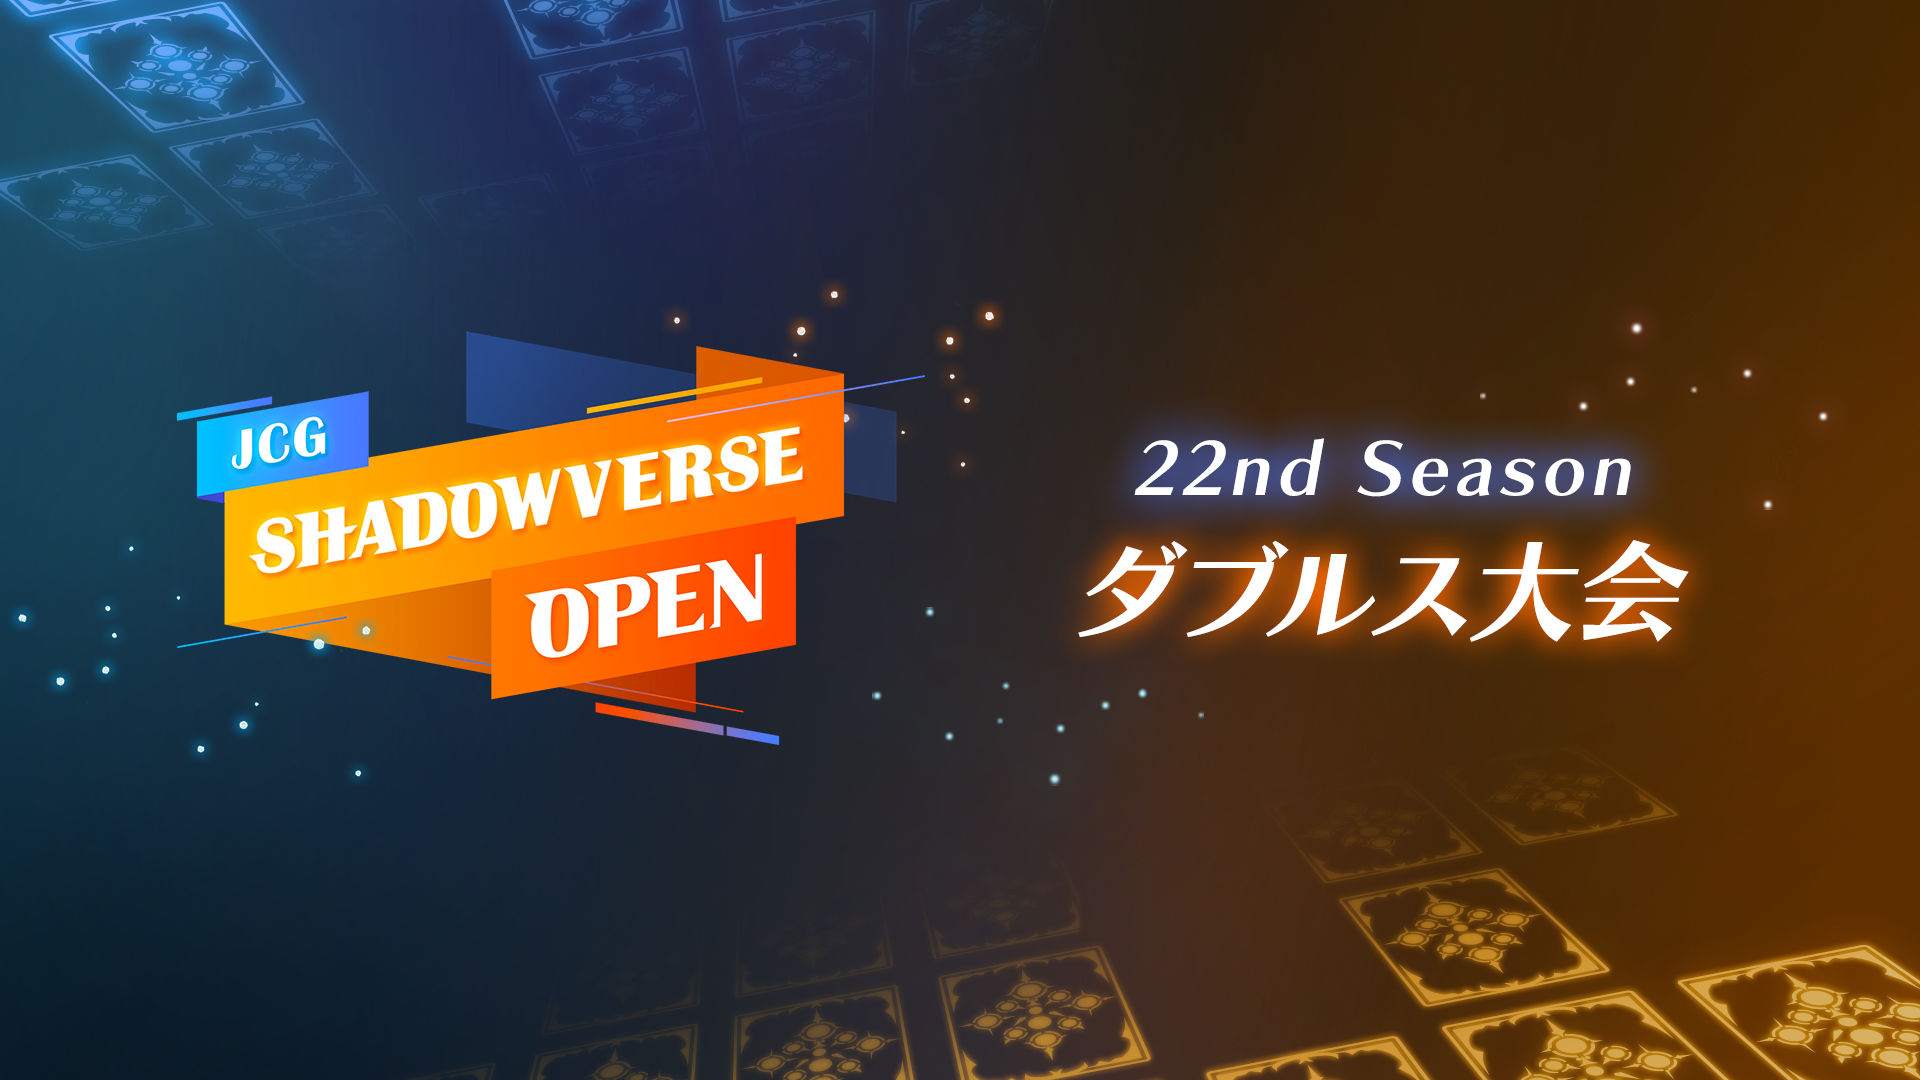 JCG Shadowverse Open 22nd Season ダブルス大会